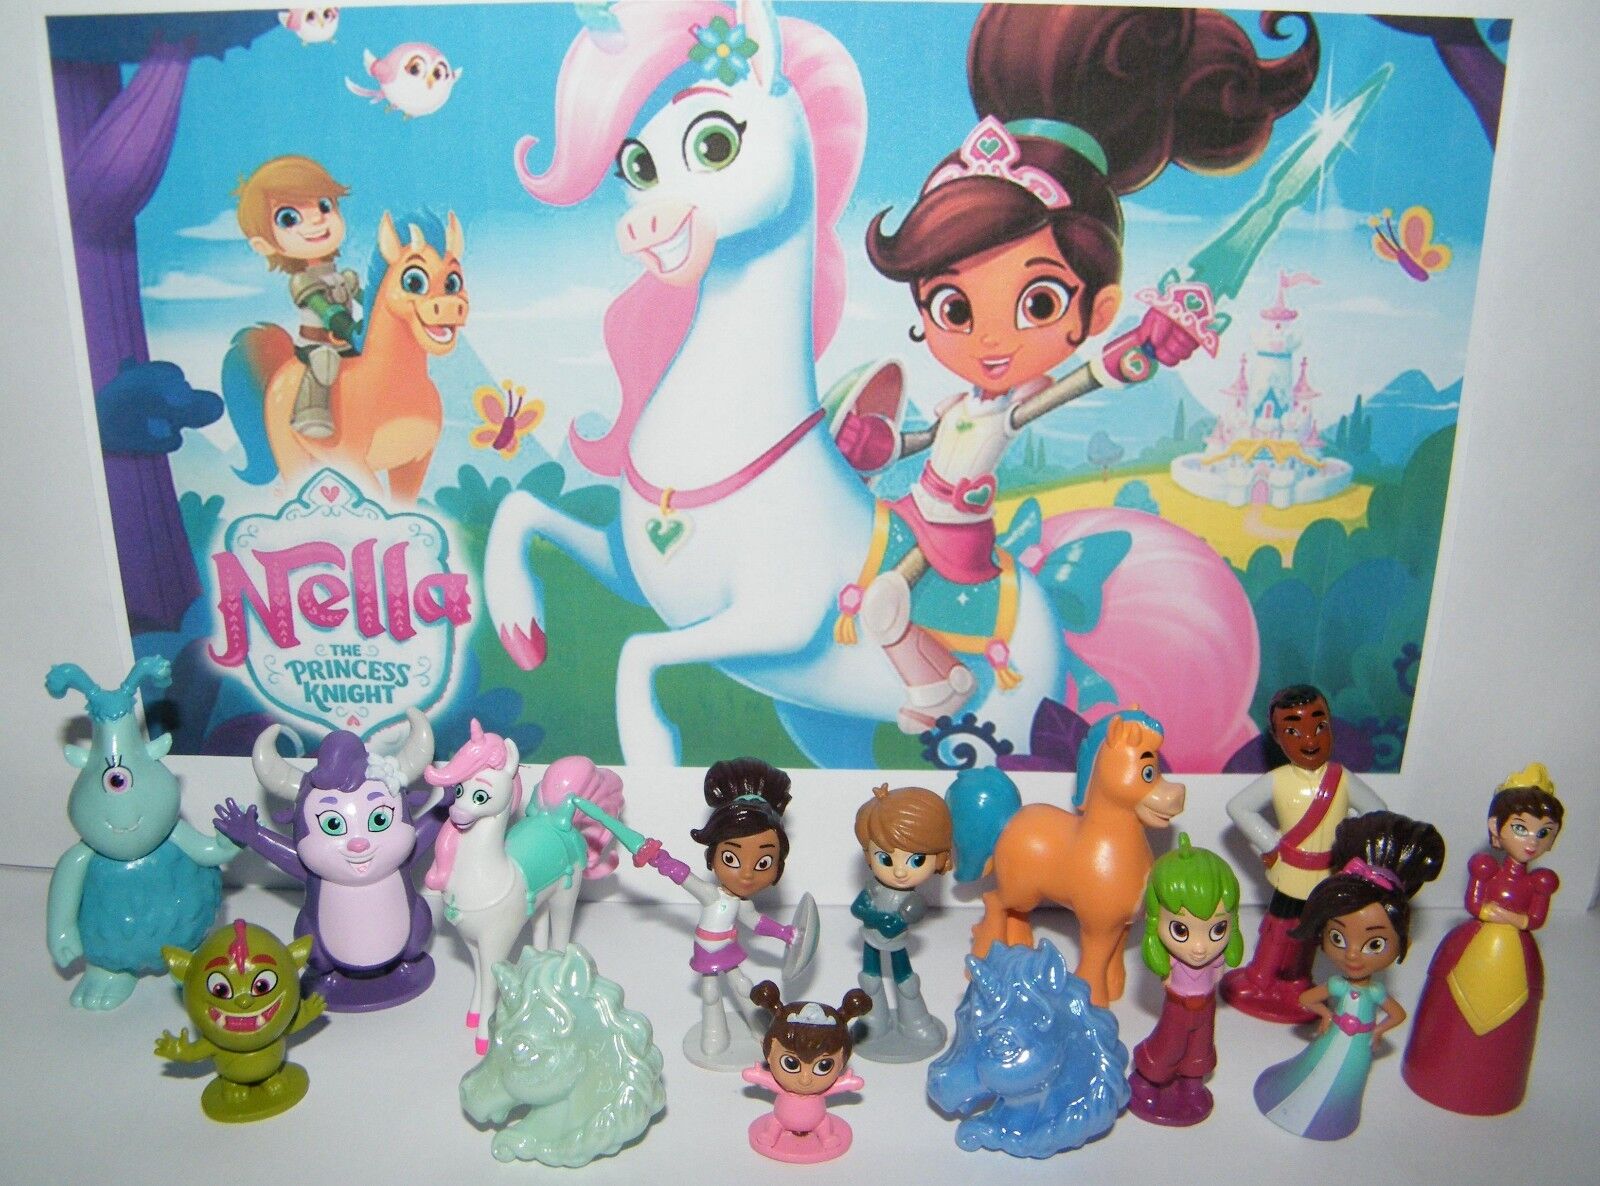 Nick Jr. Nella the Princess Knight Figure Set of 12 Toy Kit with 2 Unicorn Rings